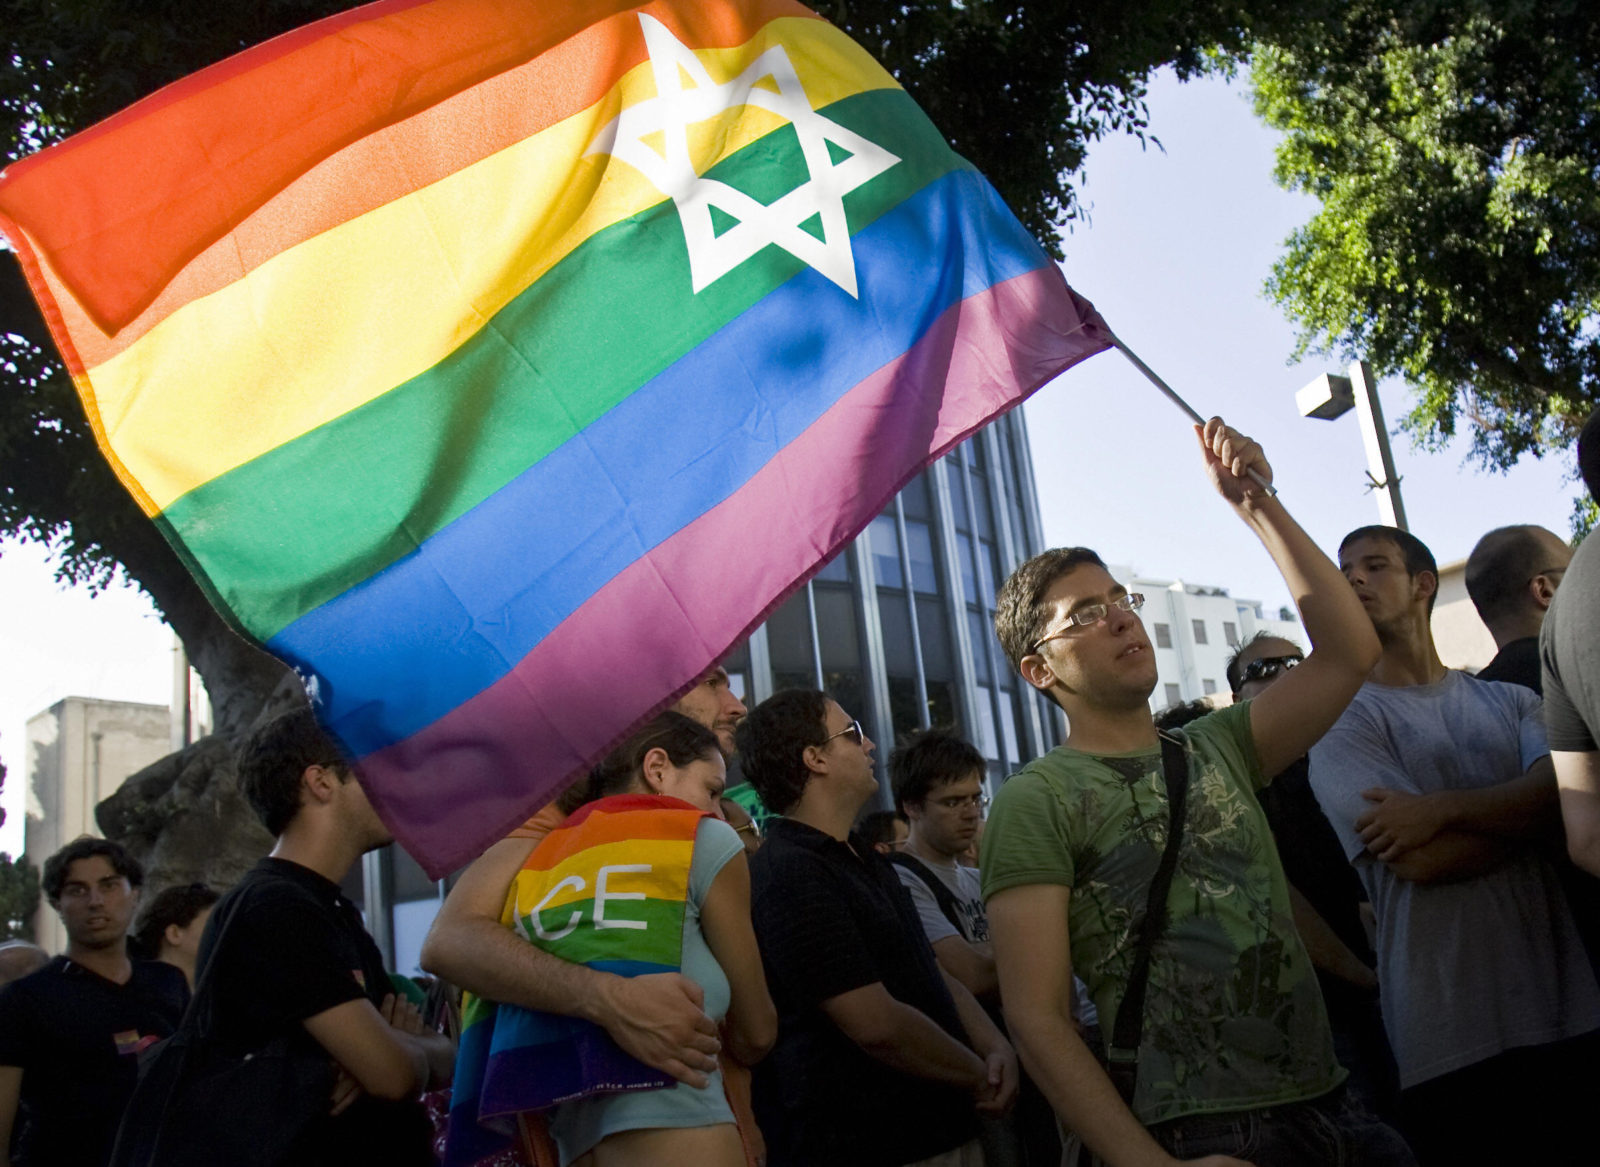 An Israeli man waves a Pride rainbow flag bearing the Star of David